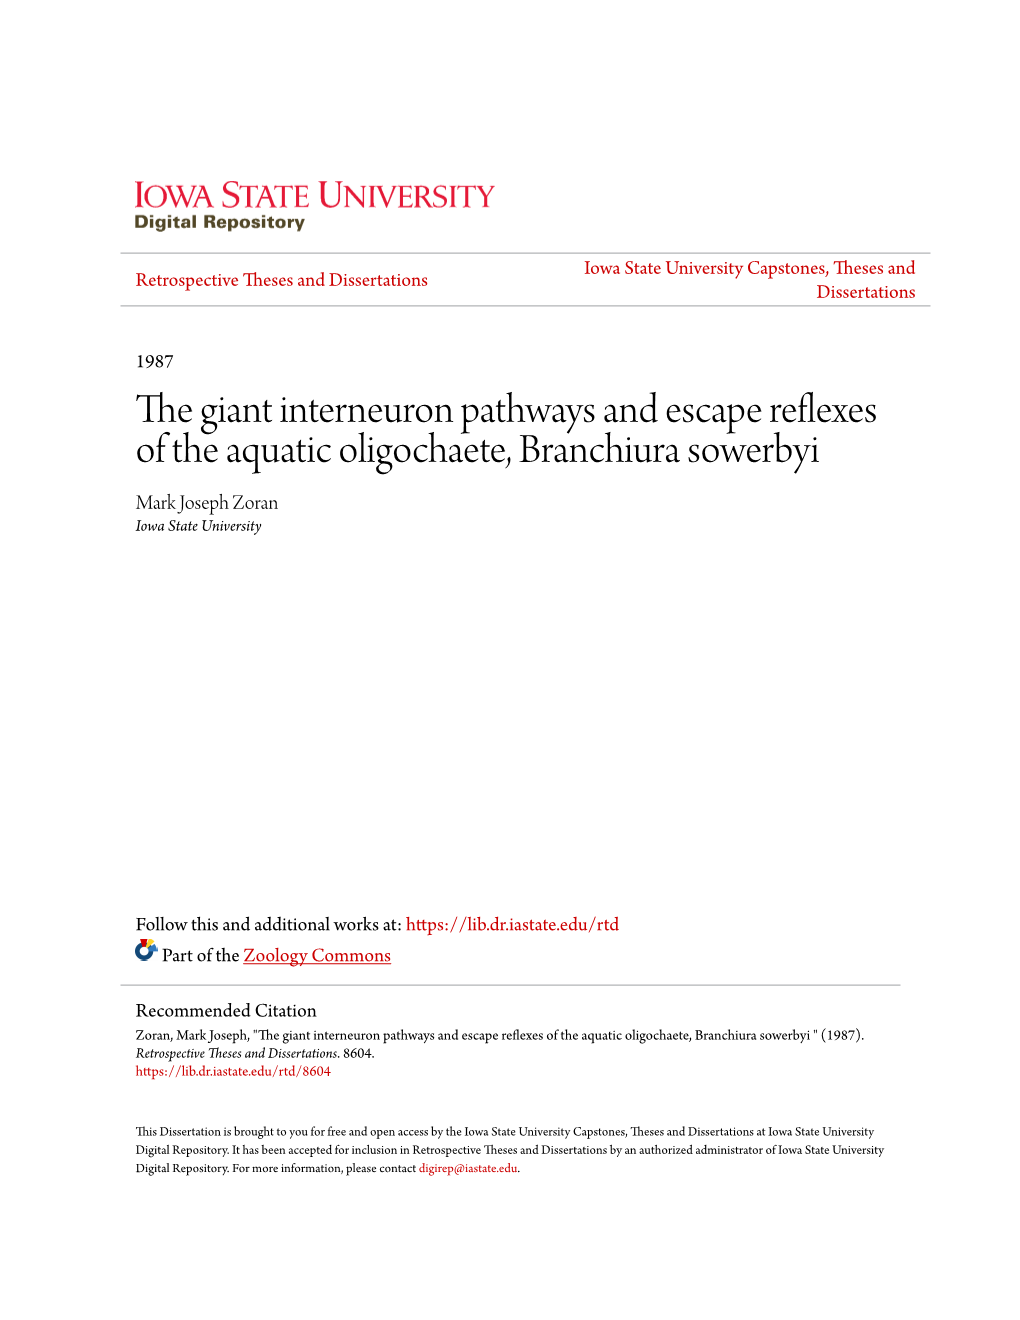 The Giant Interneuron Pathways and Escape Reflexes of the Aquatic Oligochaete, Branchiura Sowerbyi Mark Joseph Zoran Iowa State University